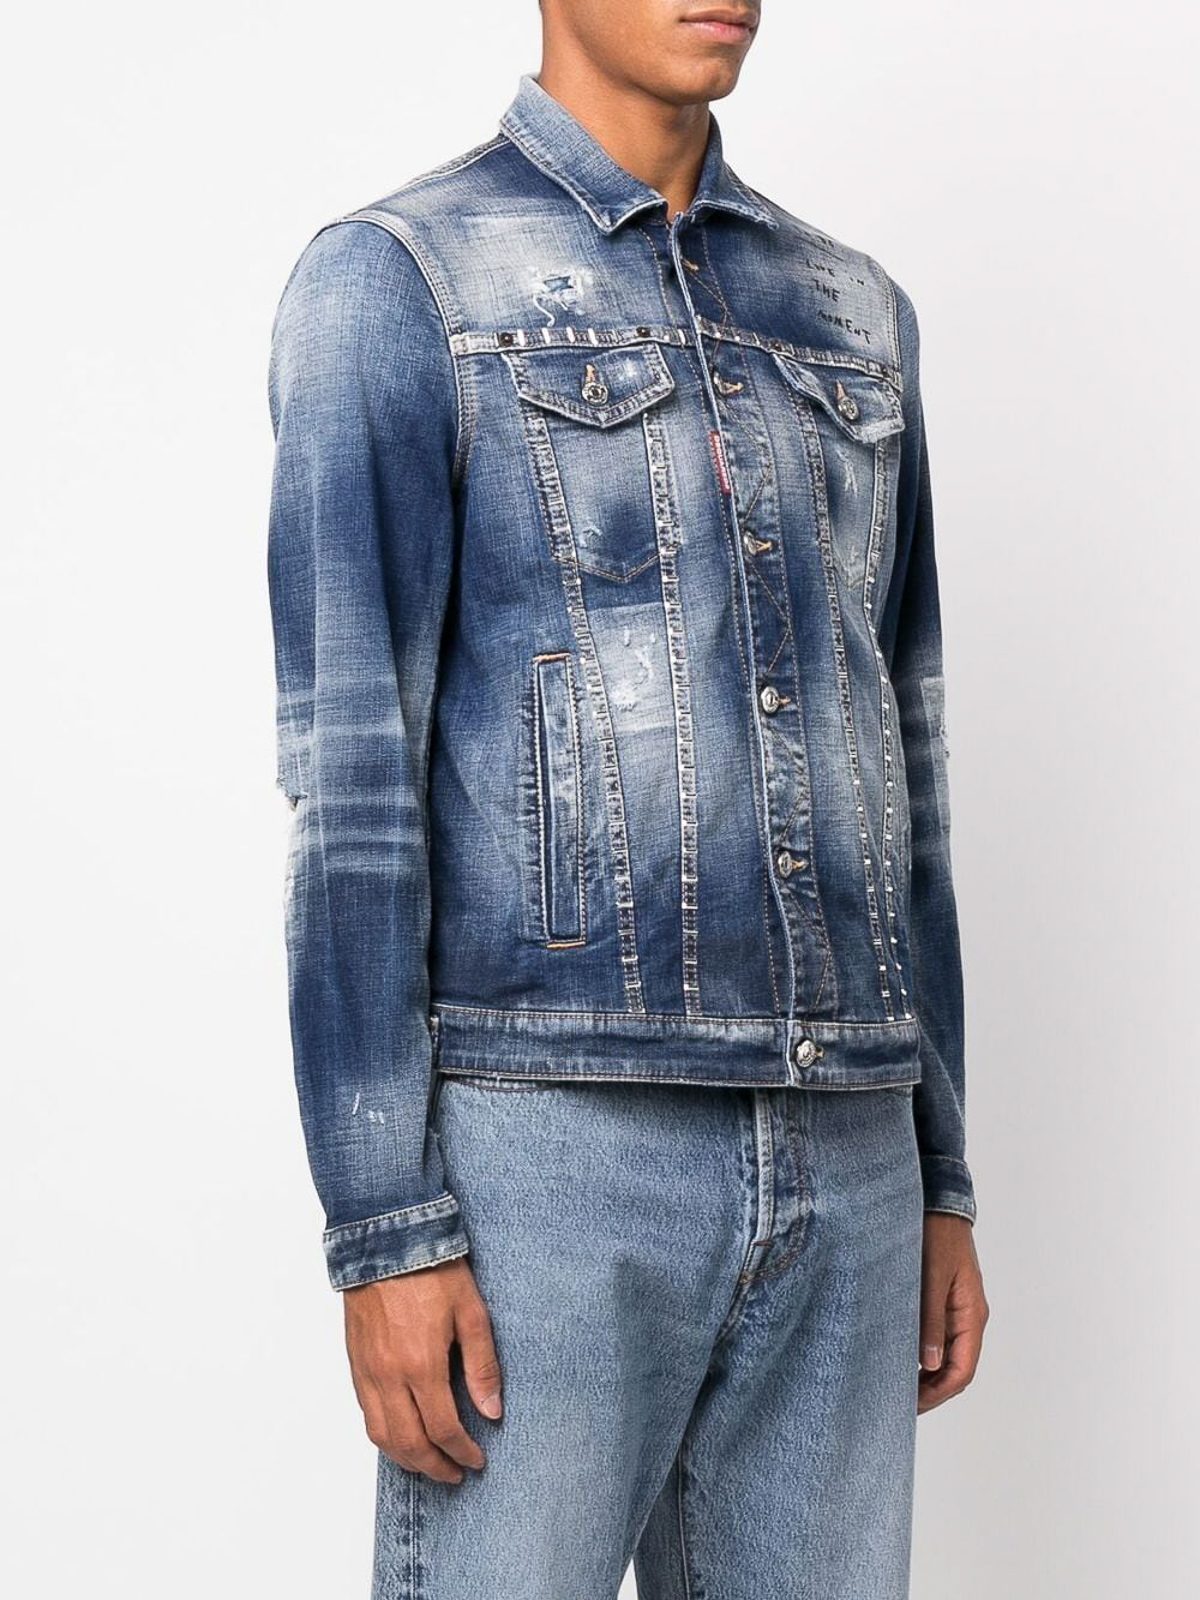 Victorious Men's Long Sleeve Button Up Distressed Denim Jean Shirt Jacket  DK158 - Veg4U